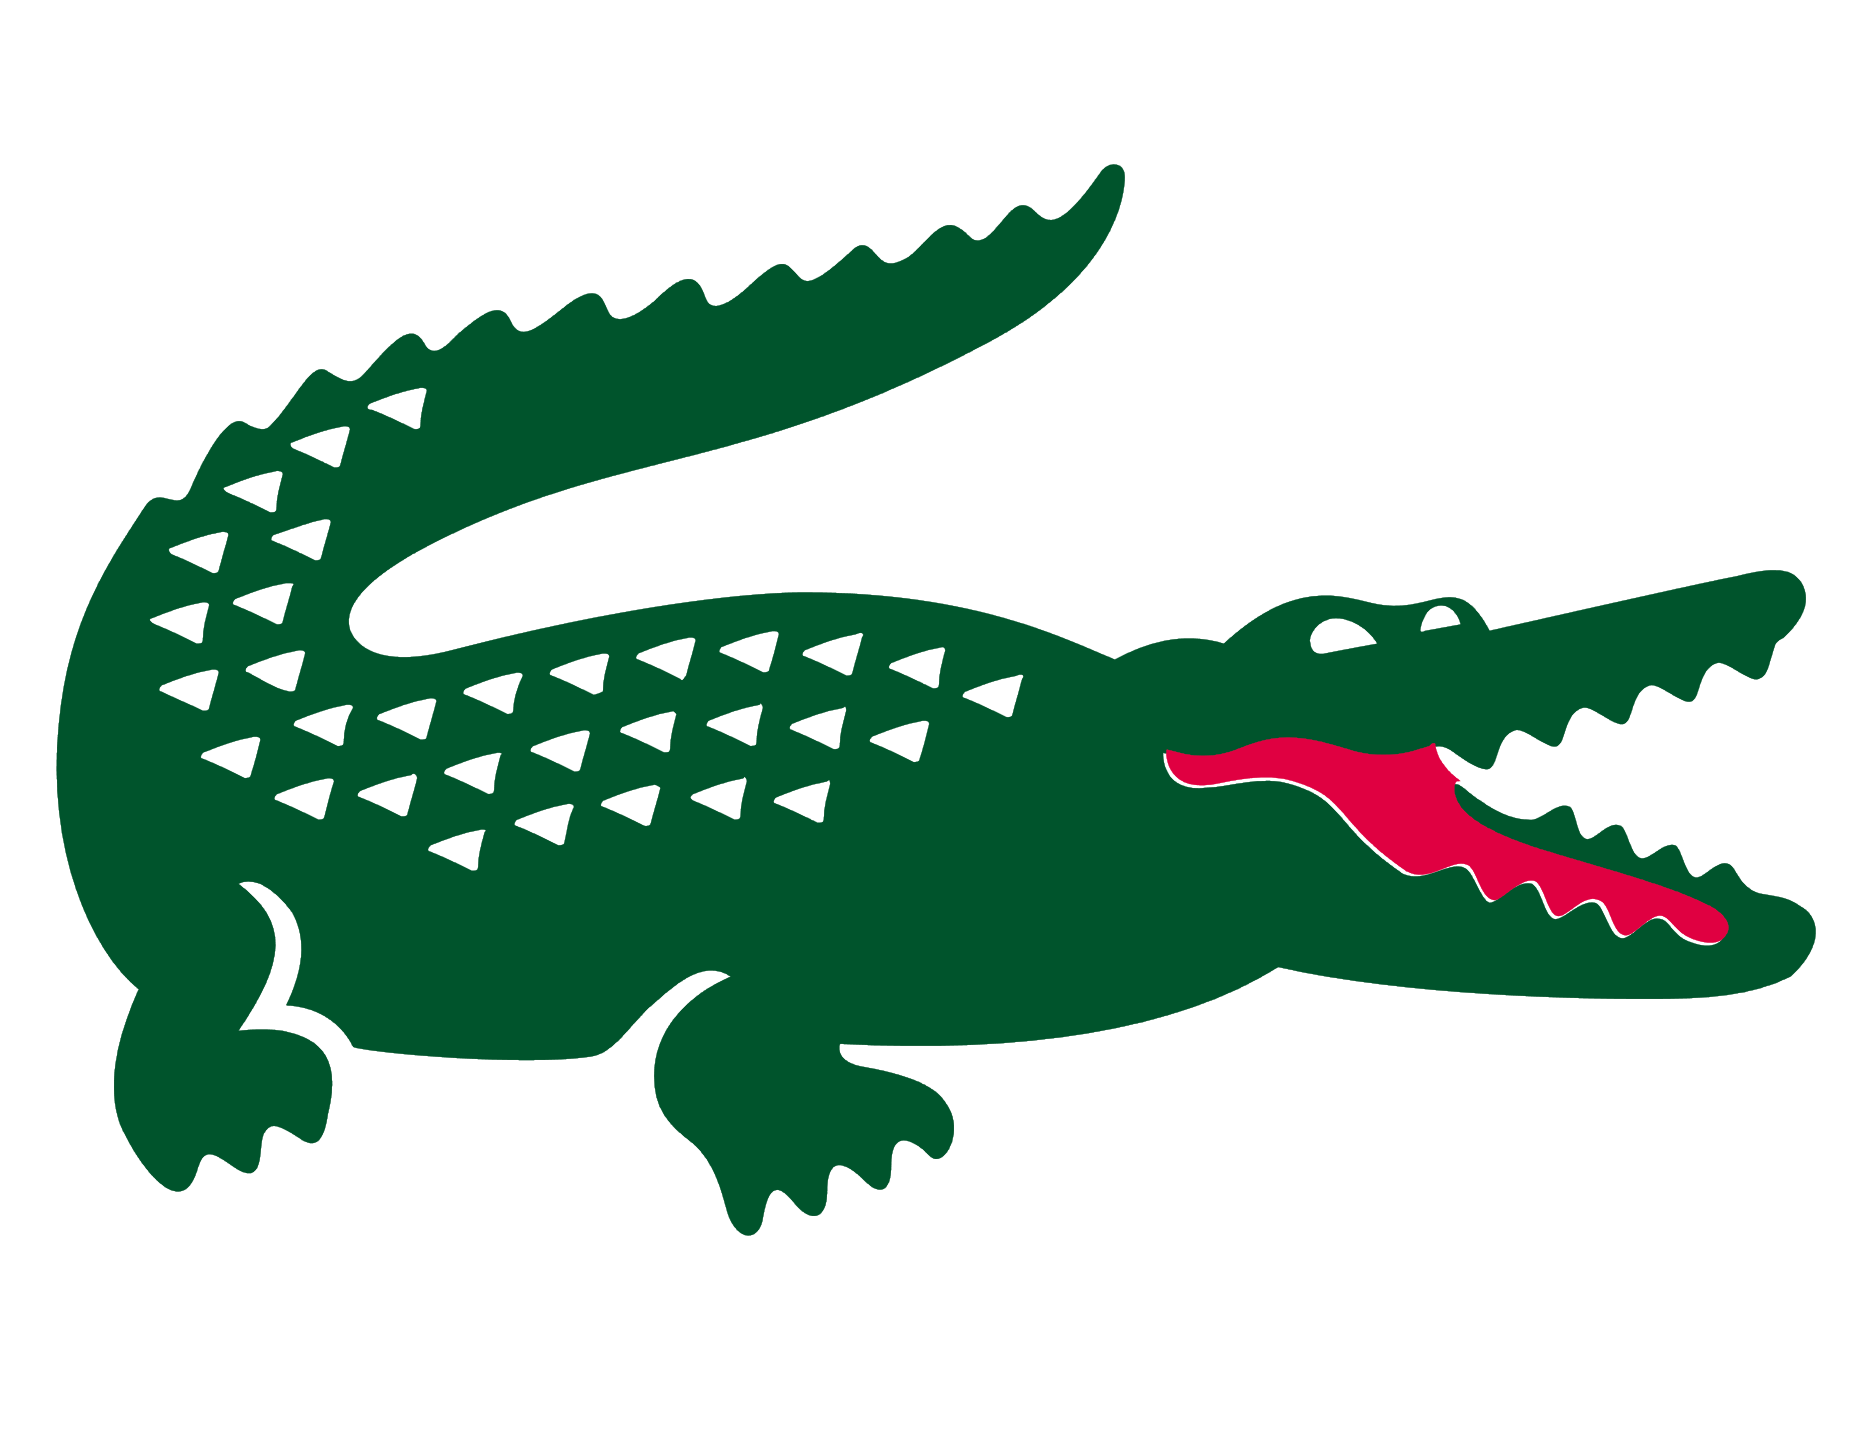 Green alligator Logos